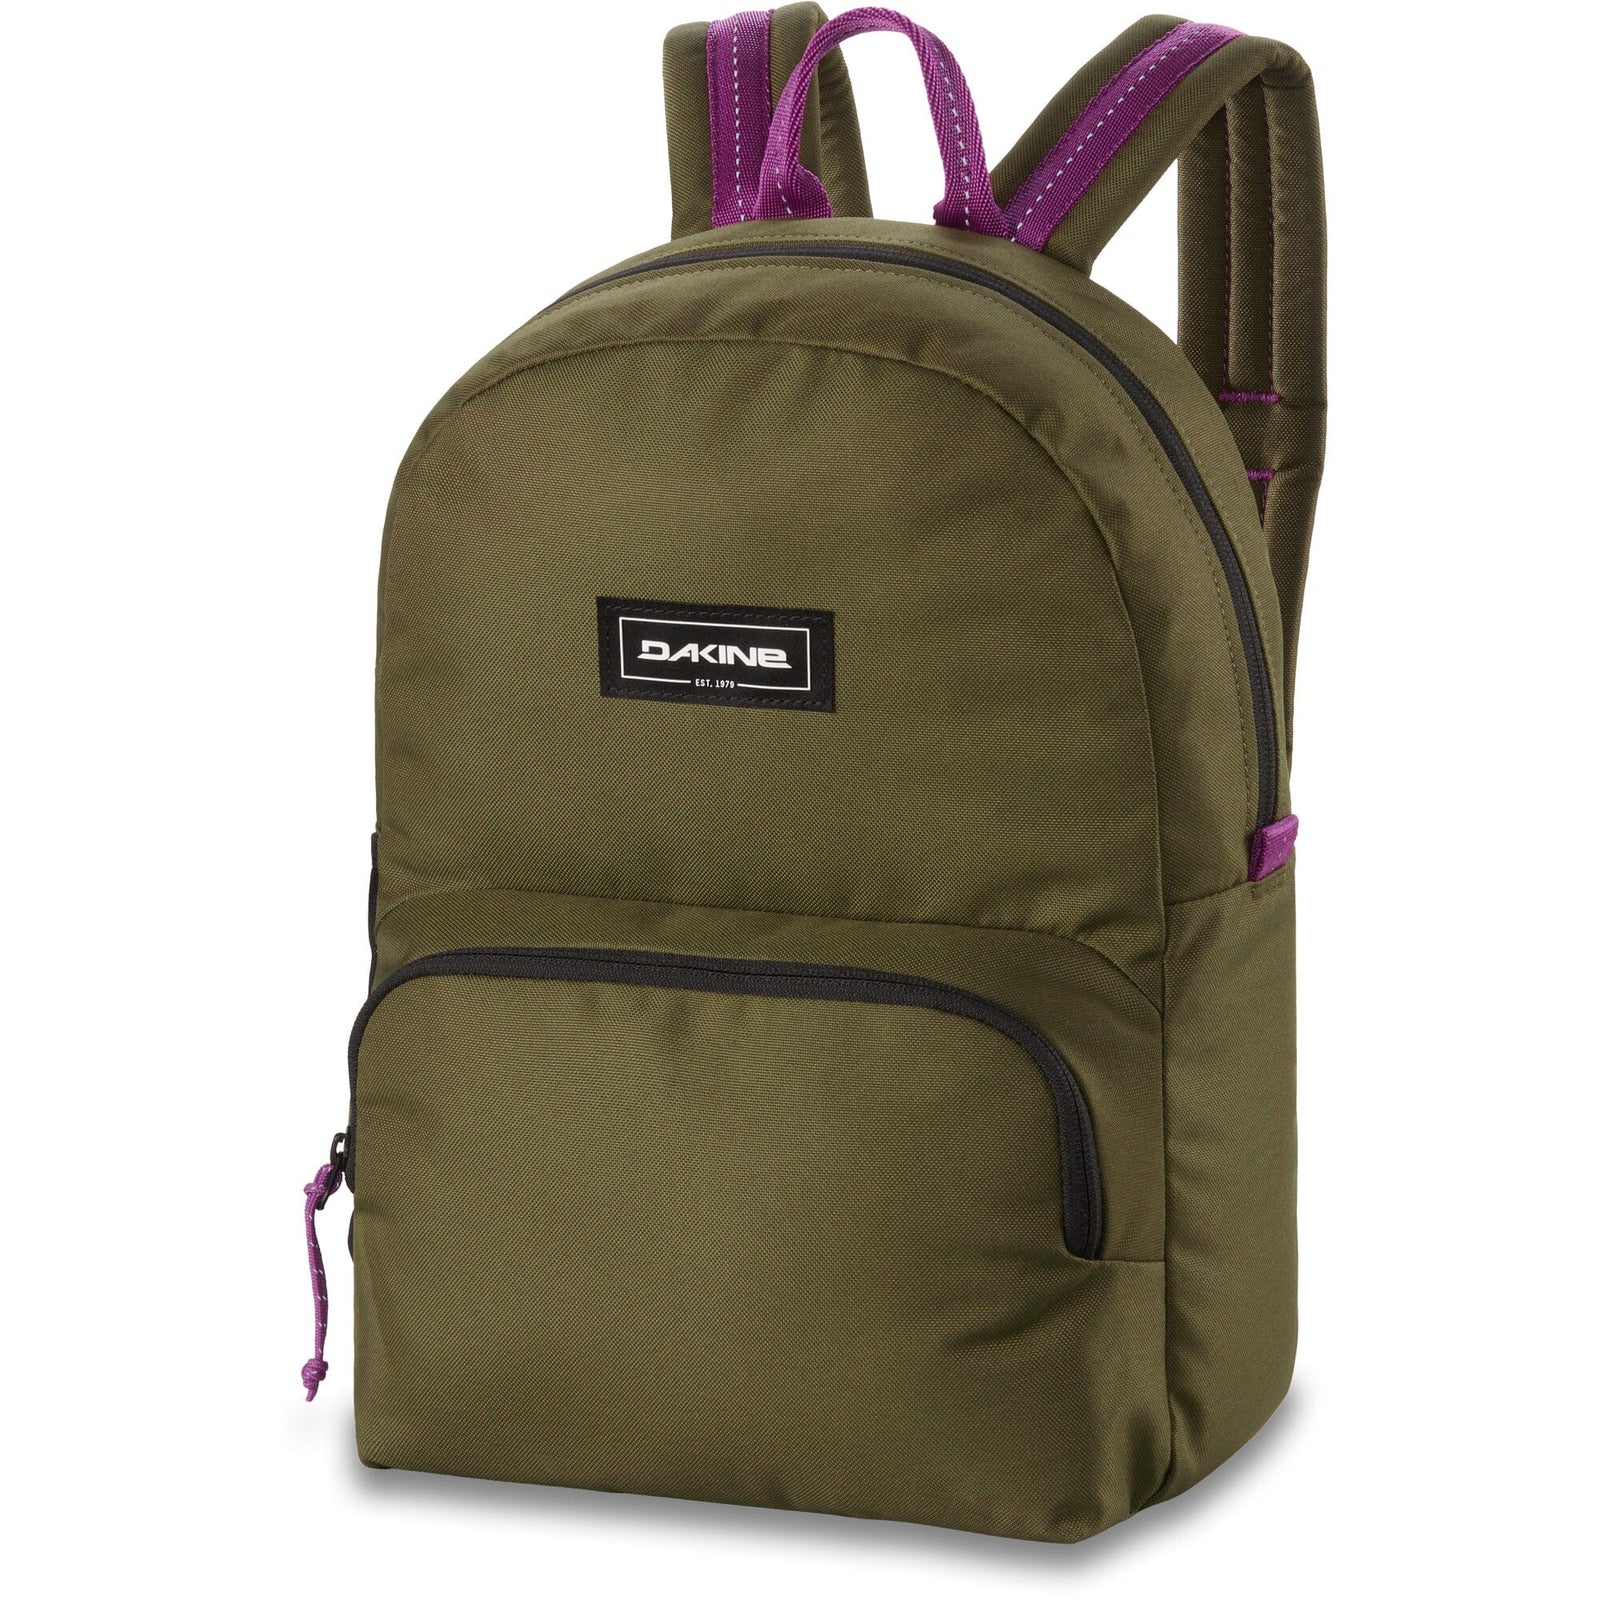 Backpacks for School, University and Work - Freeride Boardshop